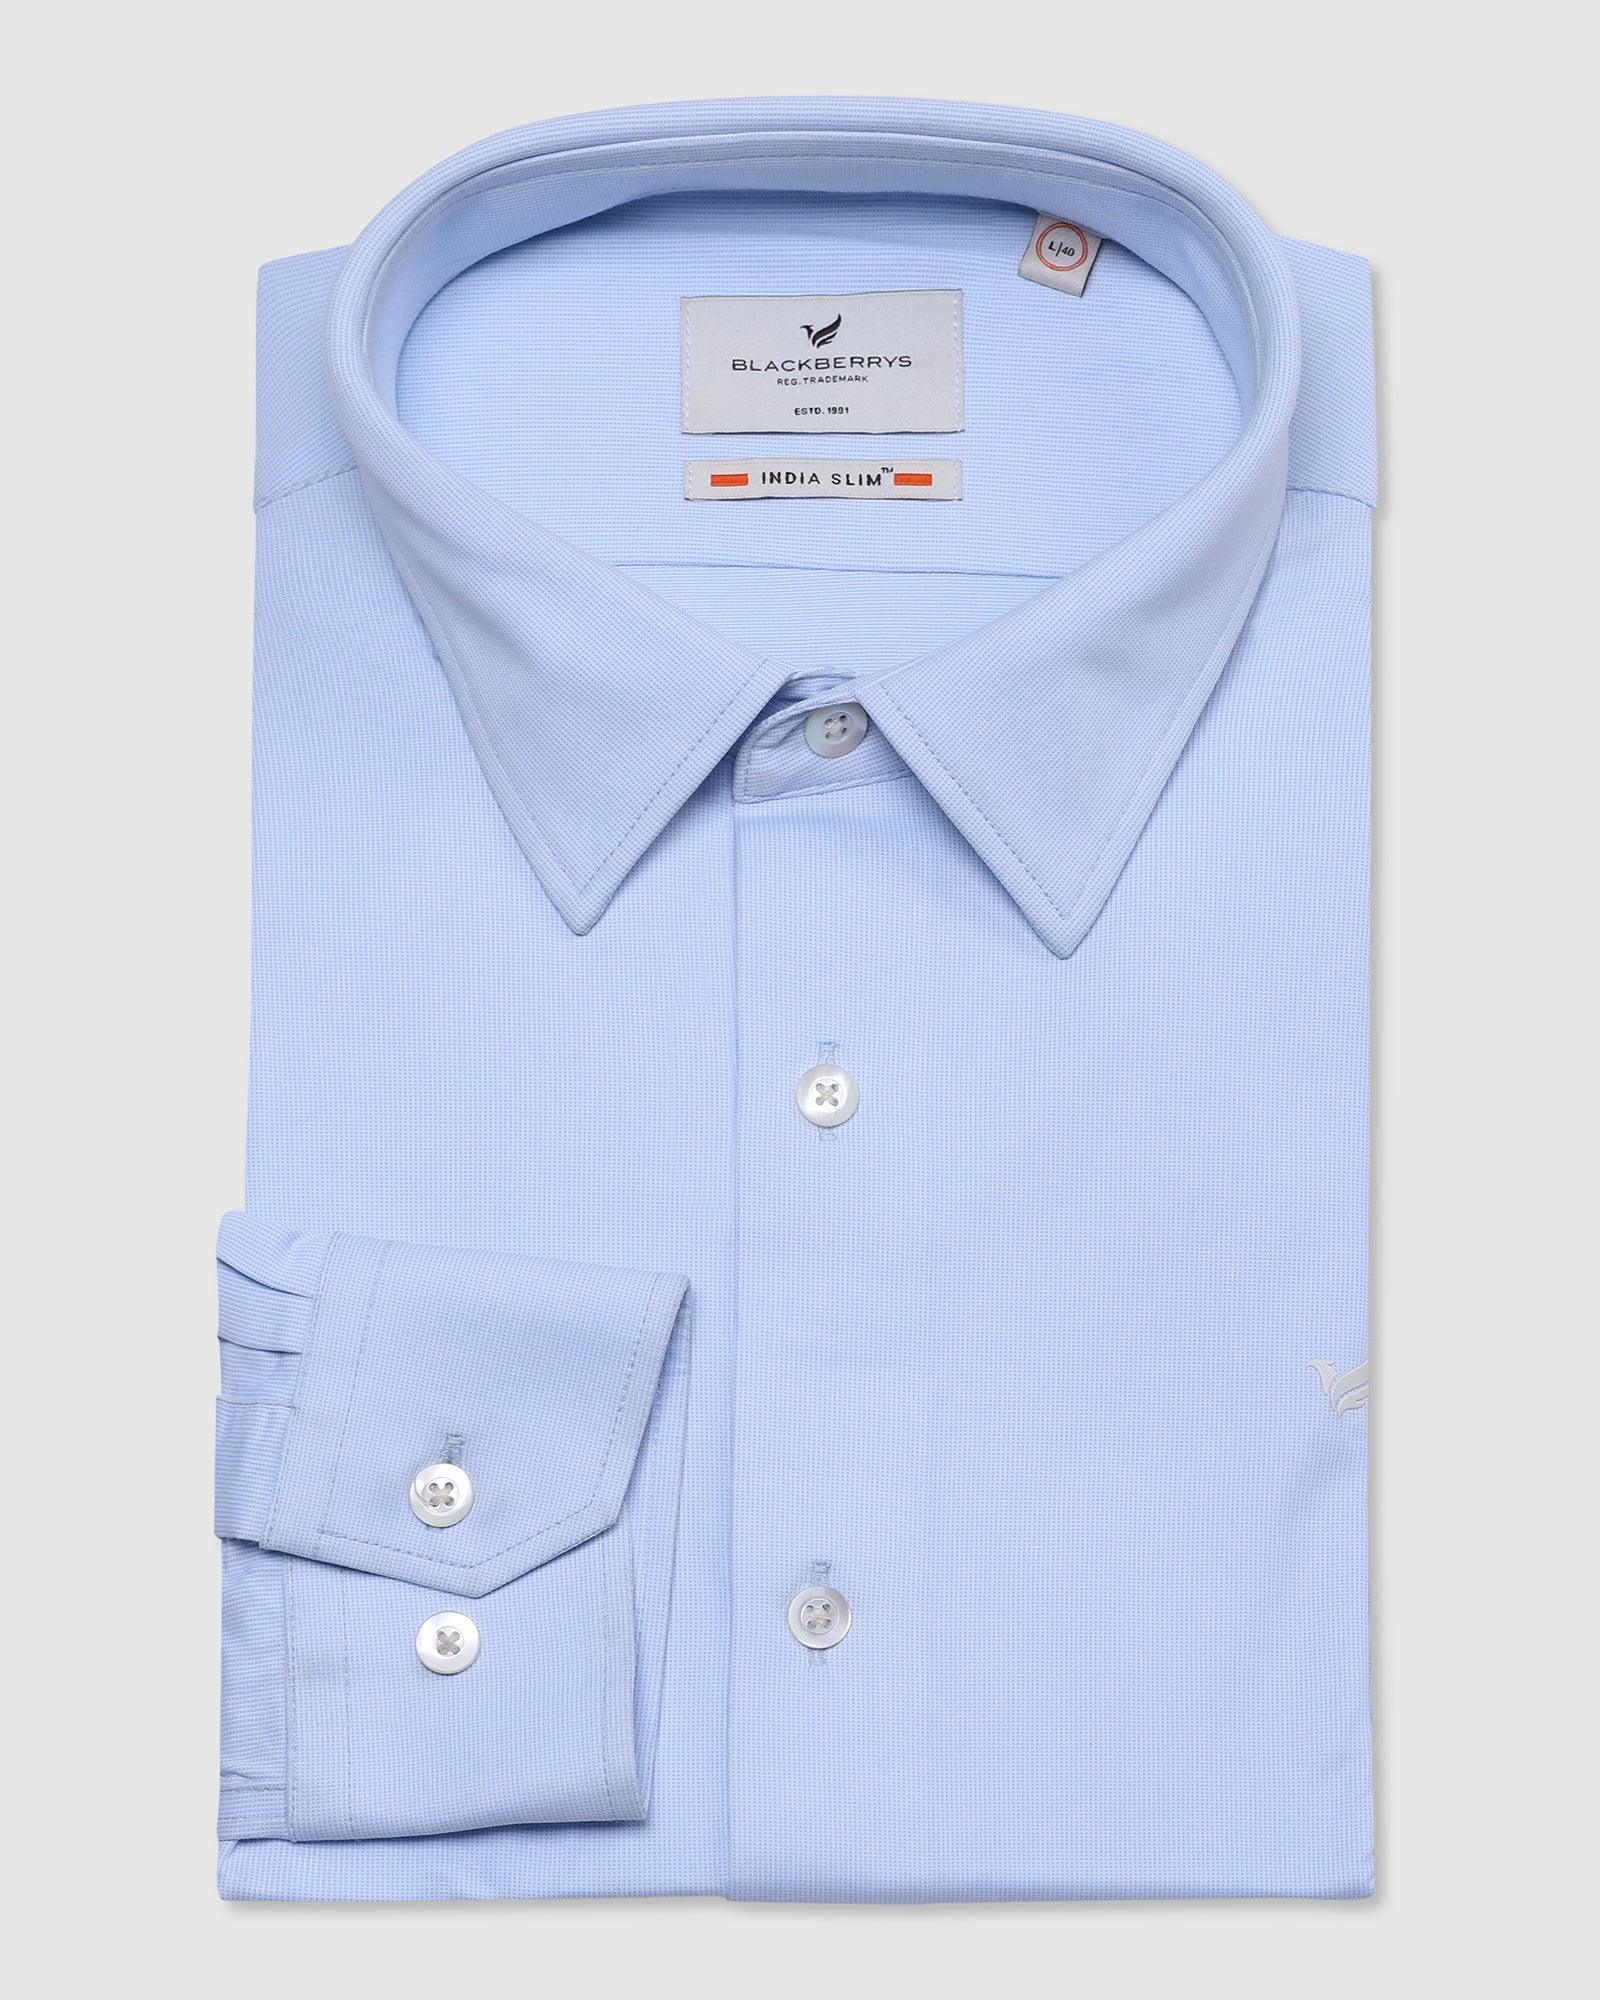 TechPro Formal Blue Textured Shirt - Proton